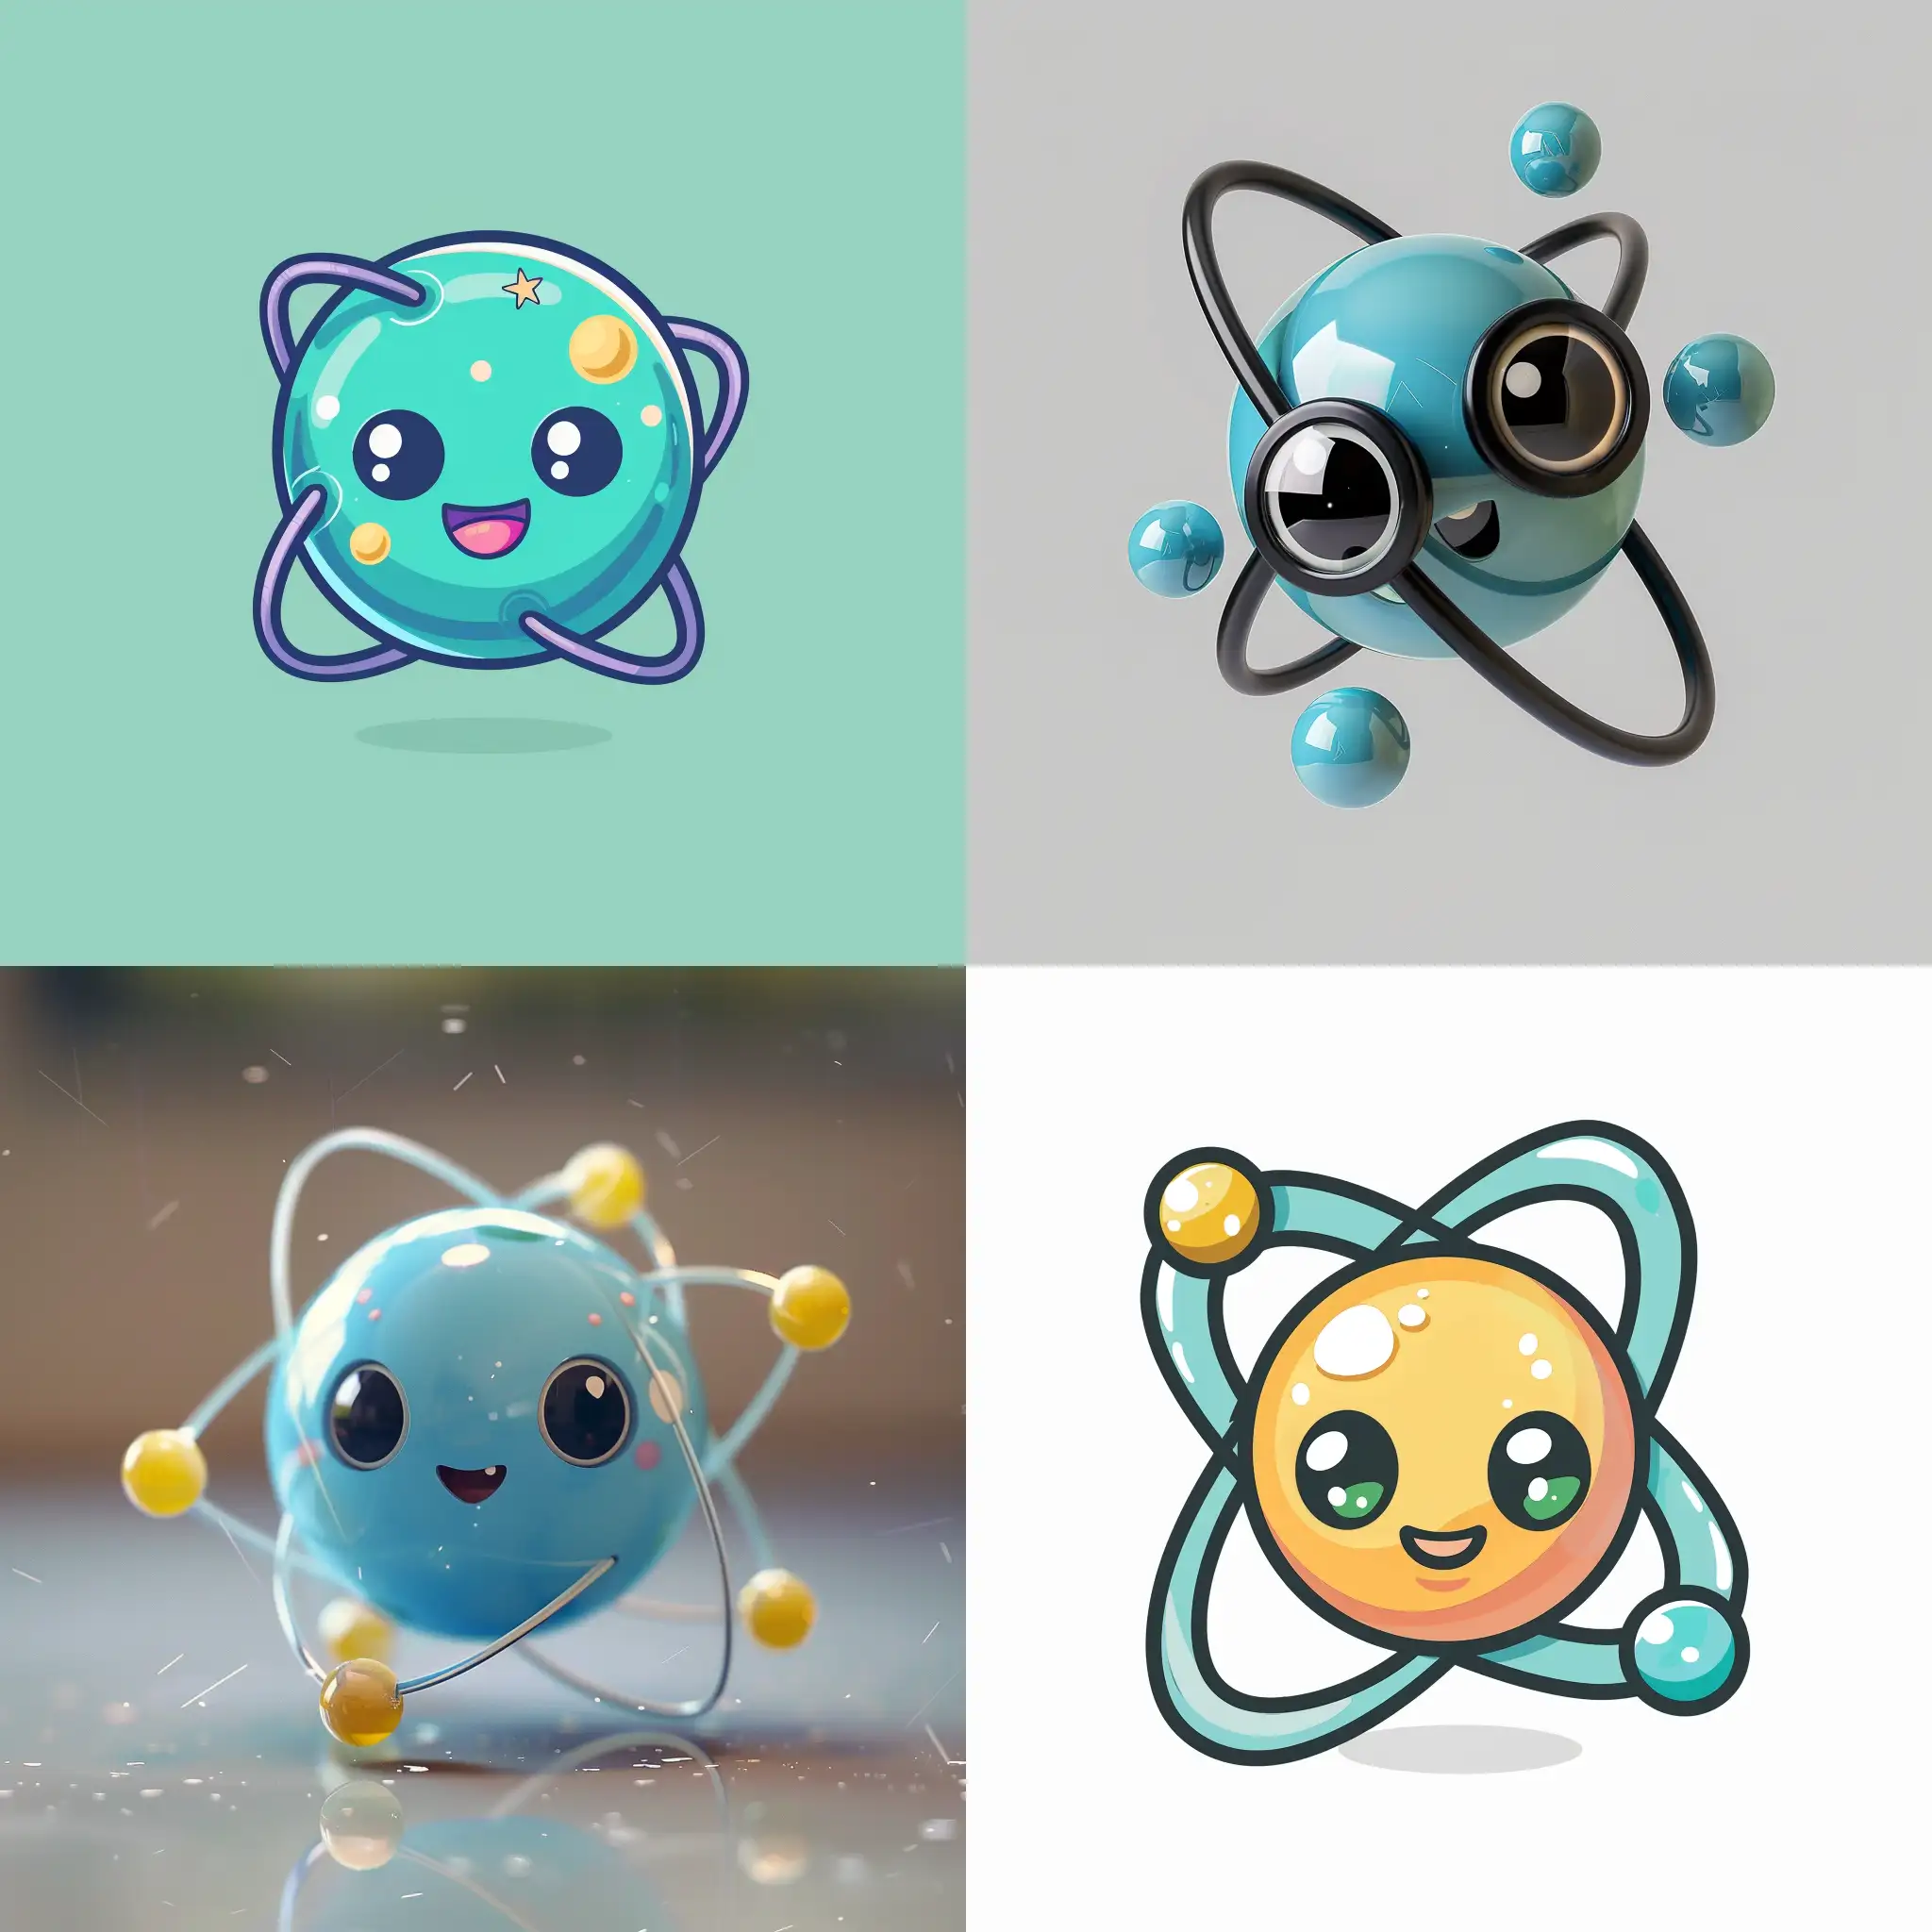 Physics-Study-Website-Mascot-AtomInspired-Character